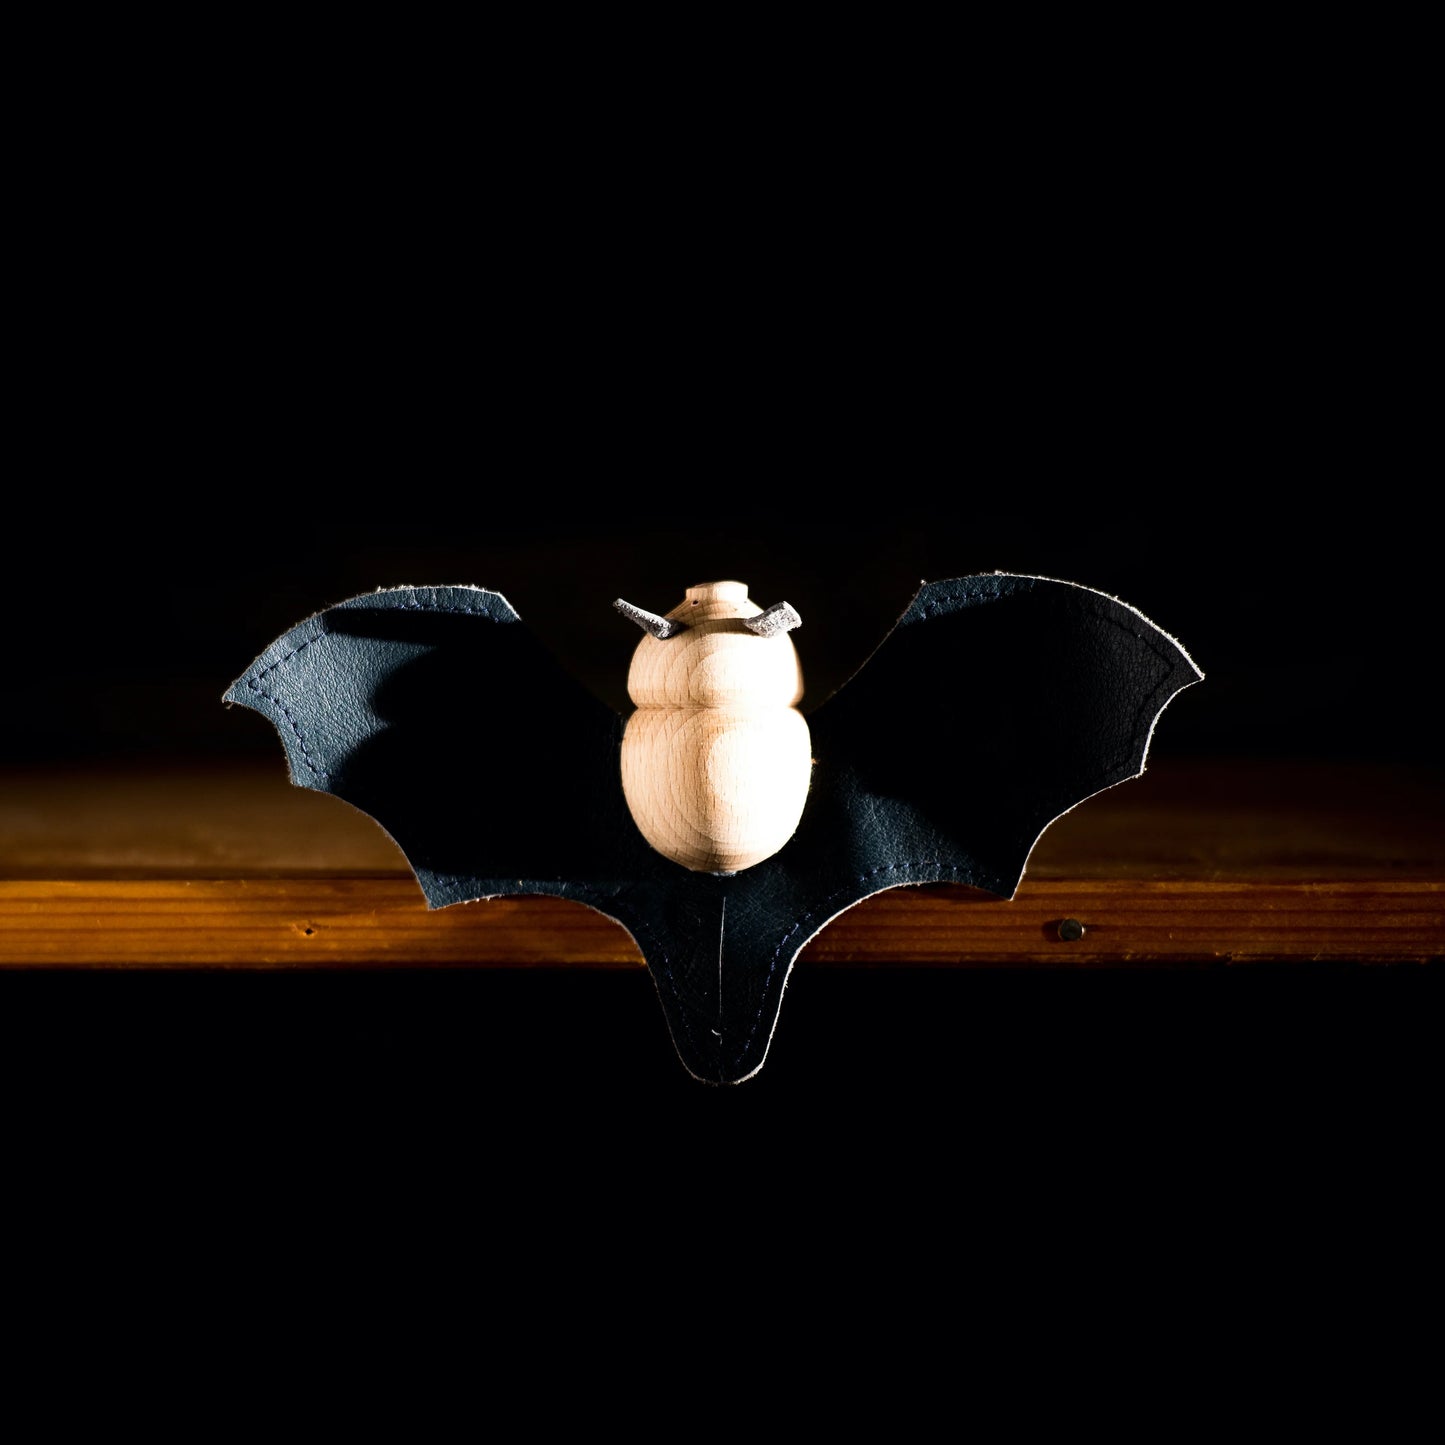 Play at Night - Open Winged Bat